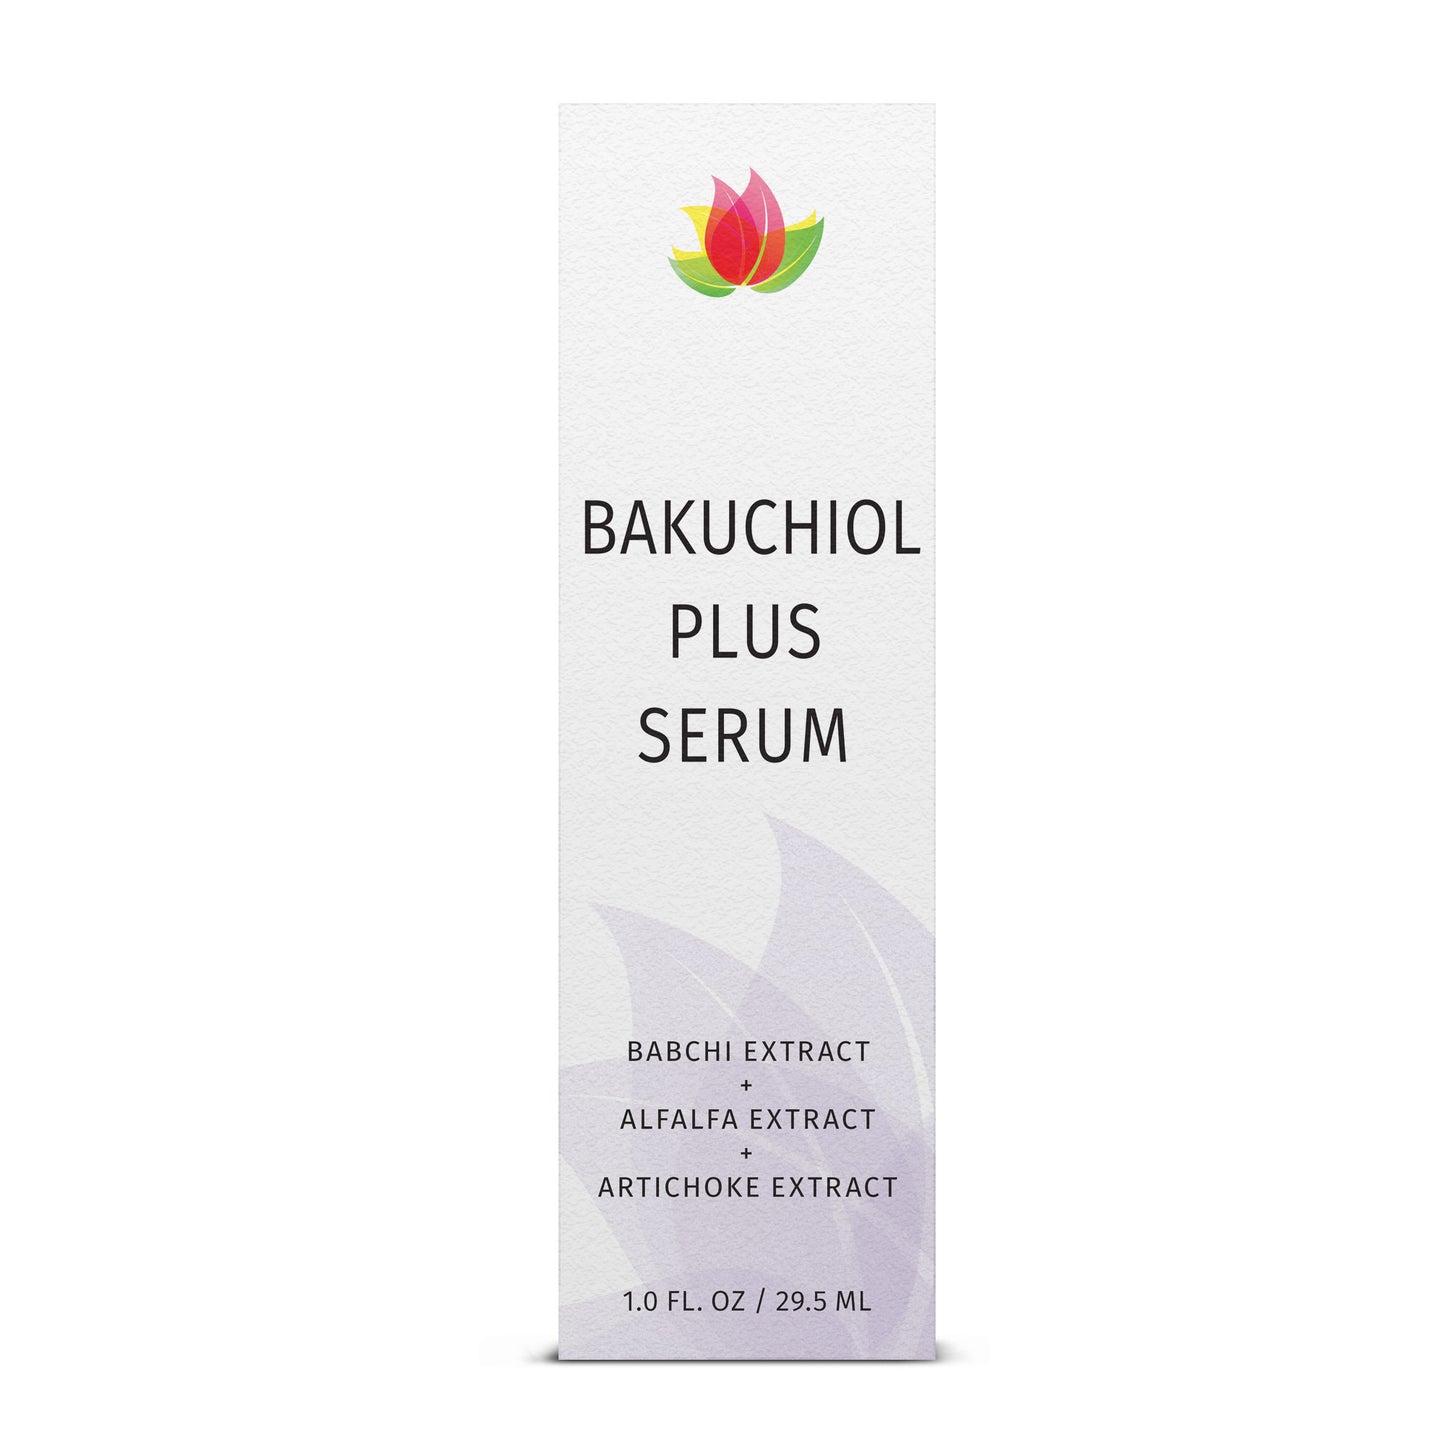 Bakuchiol Plus Serum